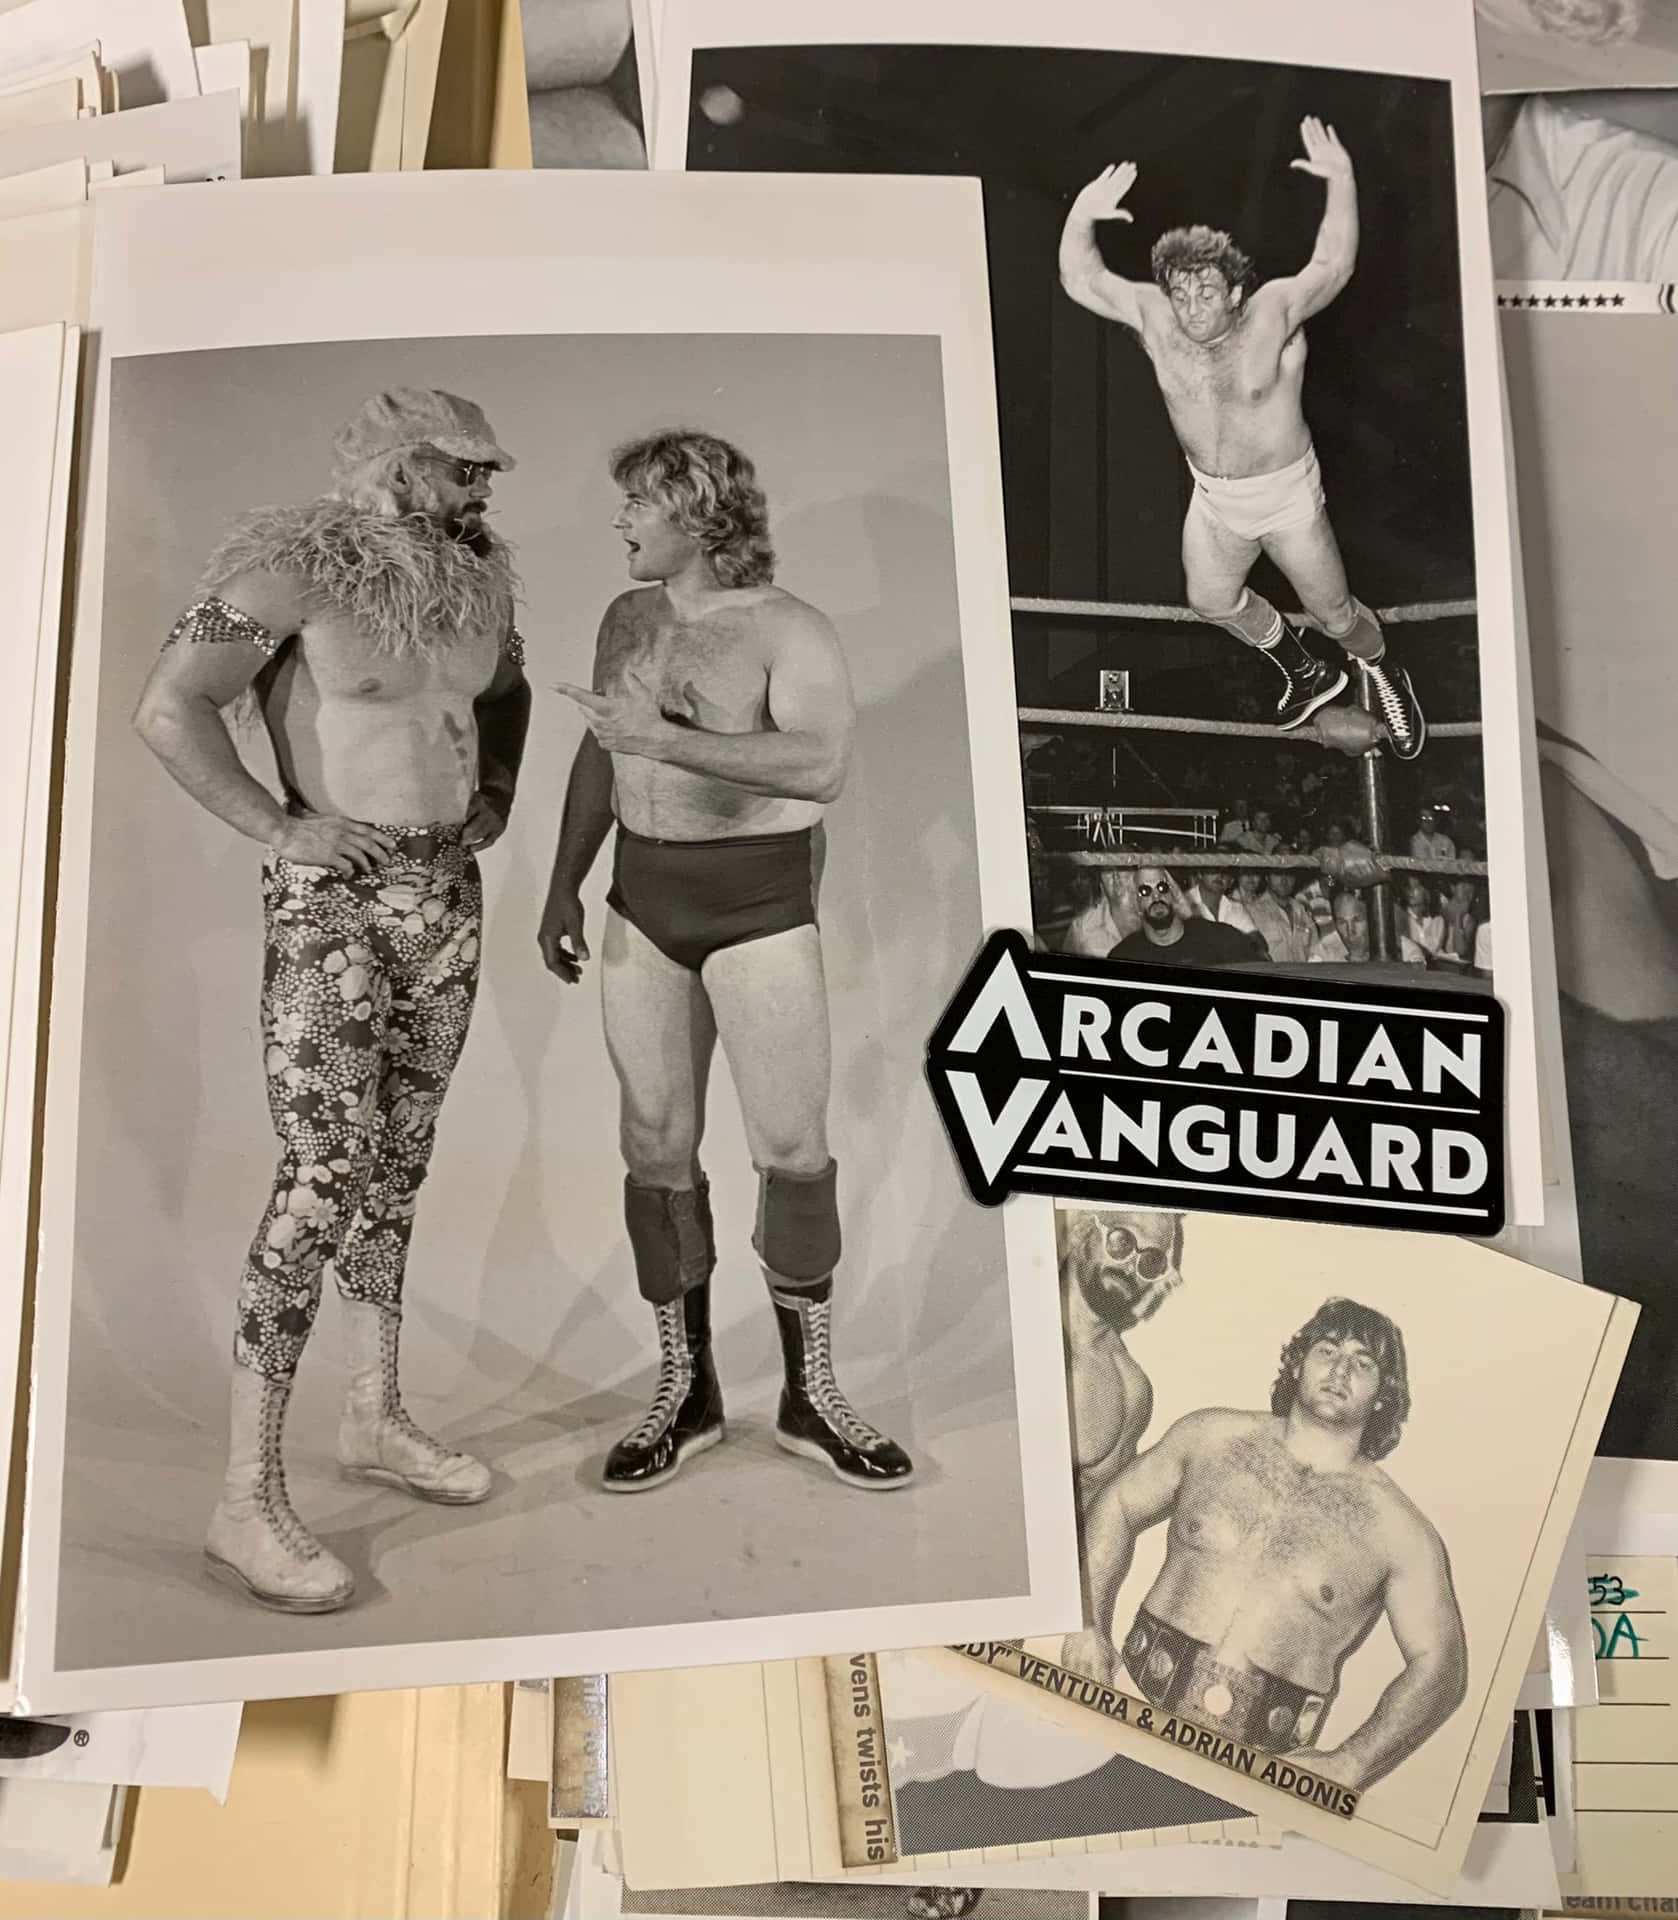 American professional wrestler Adrian Adonis posing with fellow wrestler Jesse Ventura in American Wrestling Association (AWA). Wallpaper